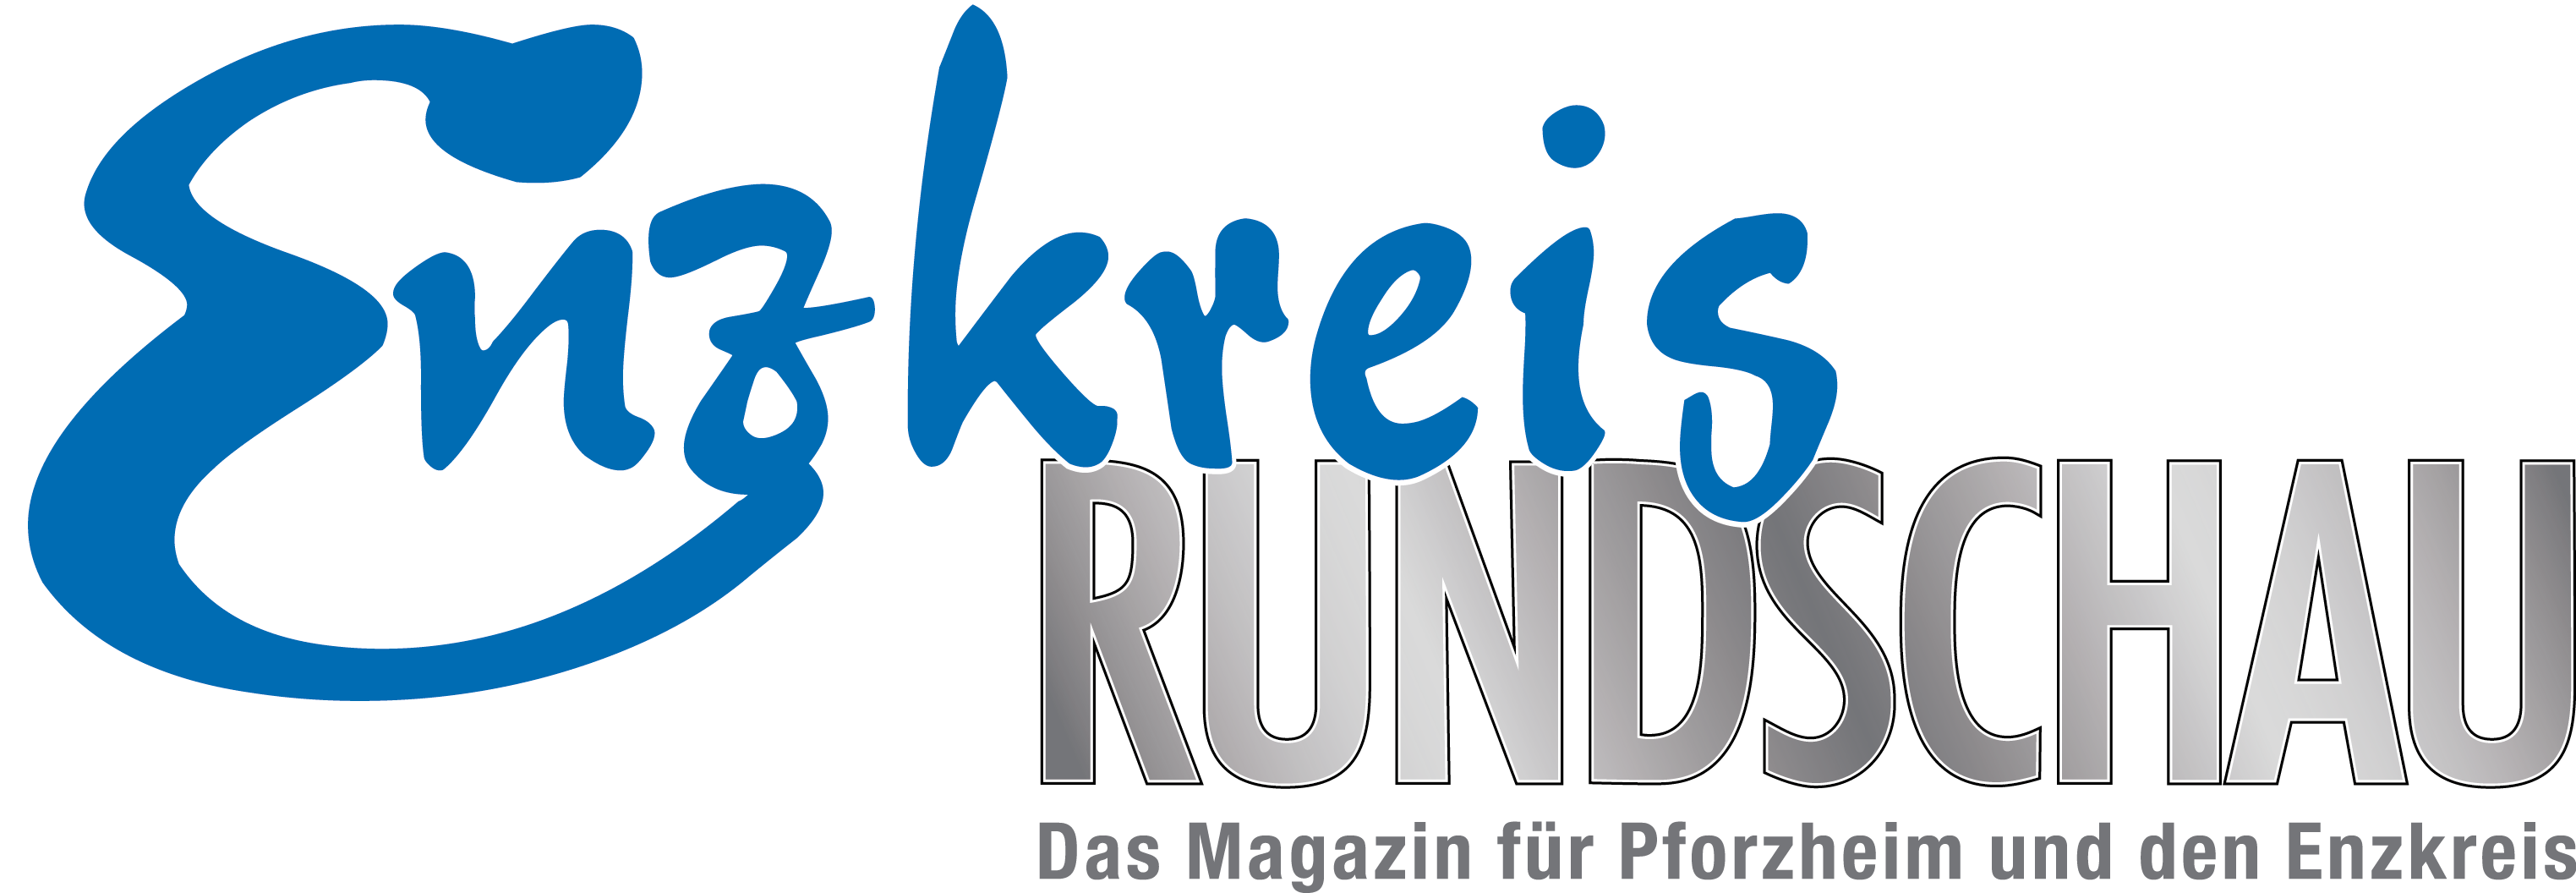 Logo Enzkreis Rundschau